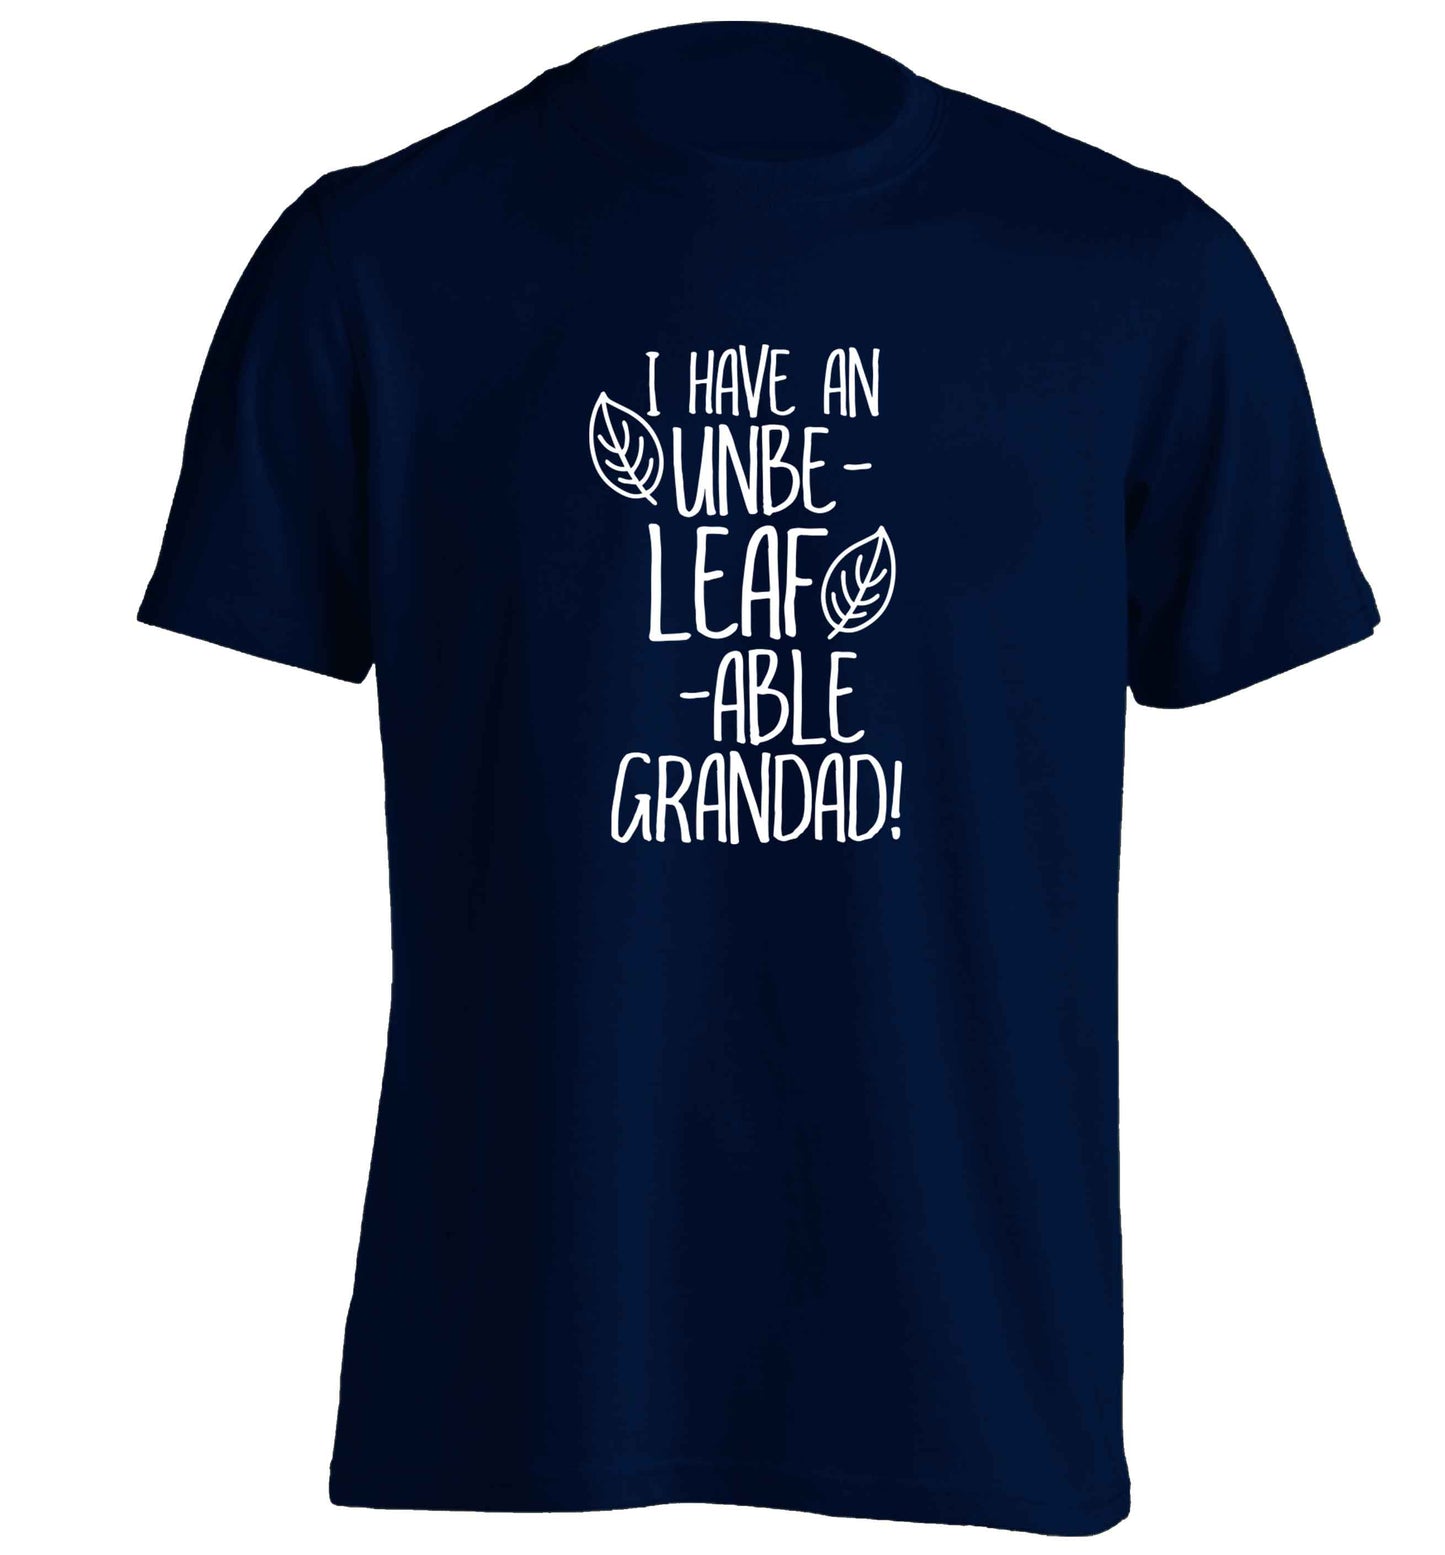 I have an unbe-leaf-able grandad adults unisex navy Tshirt 2XL